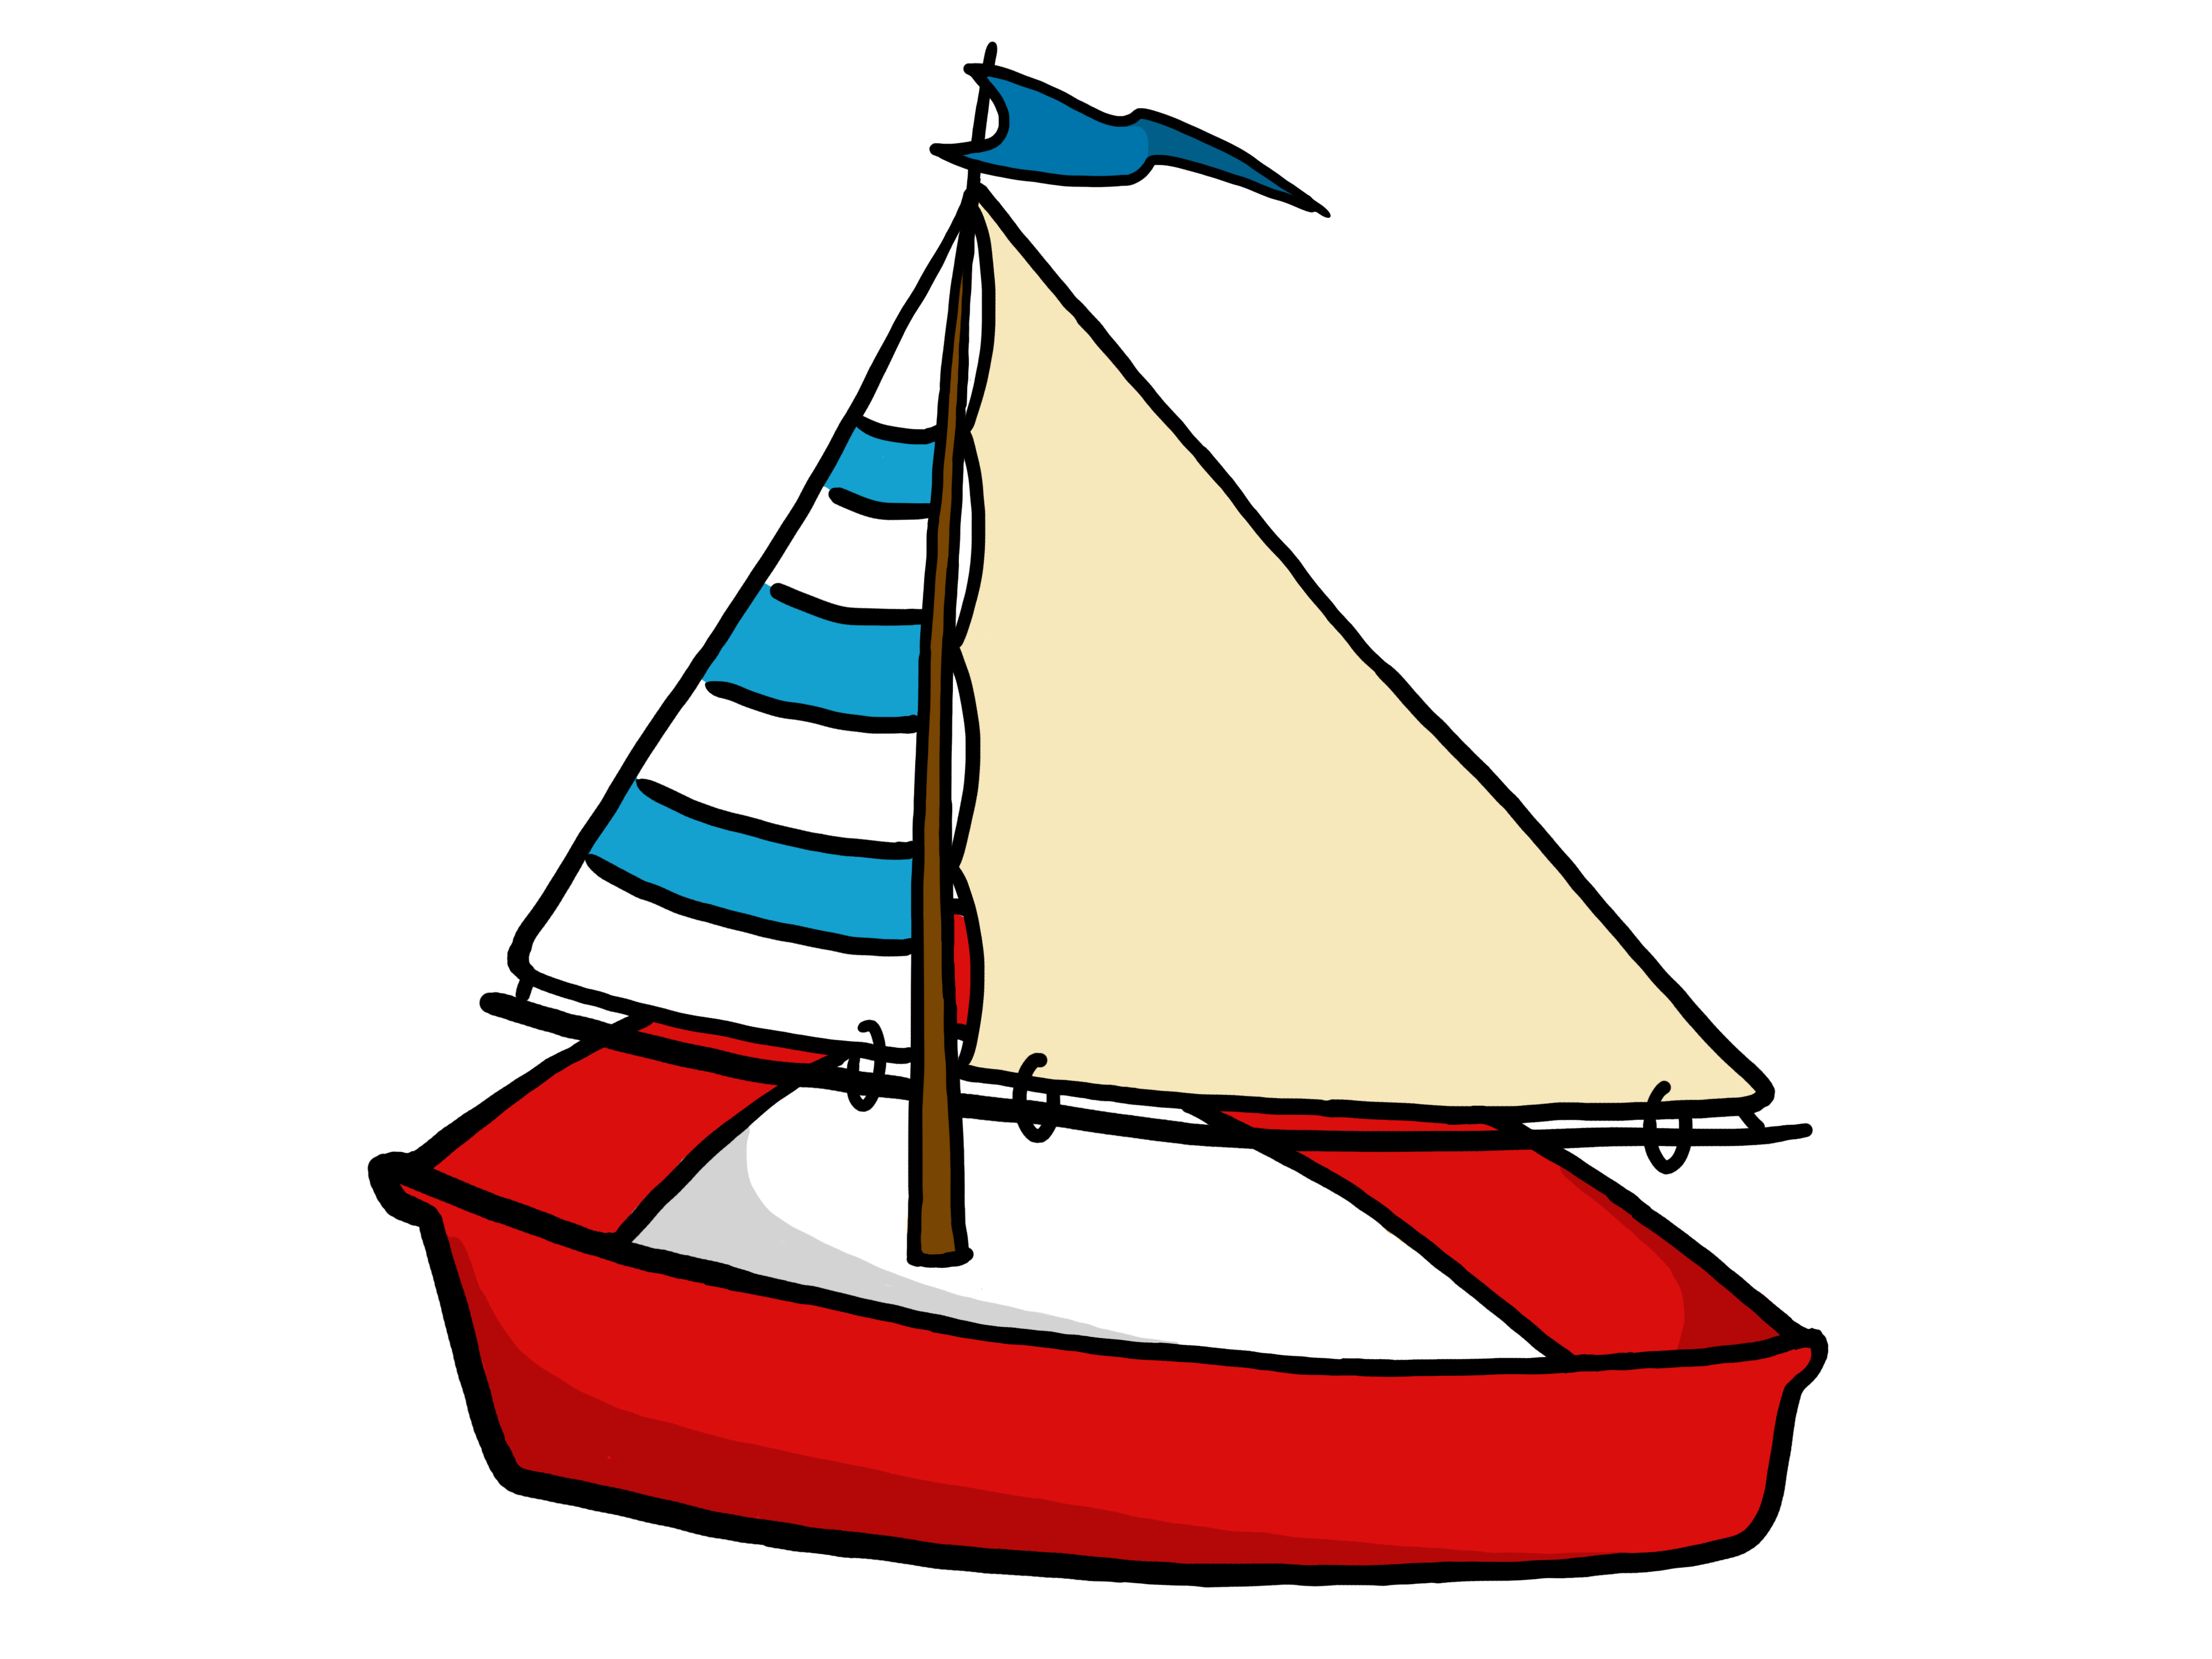 Boat clipart, Boat Transparent FREE for download on WebStockReview 2020